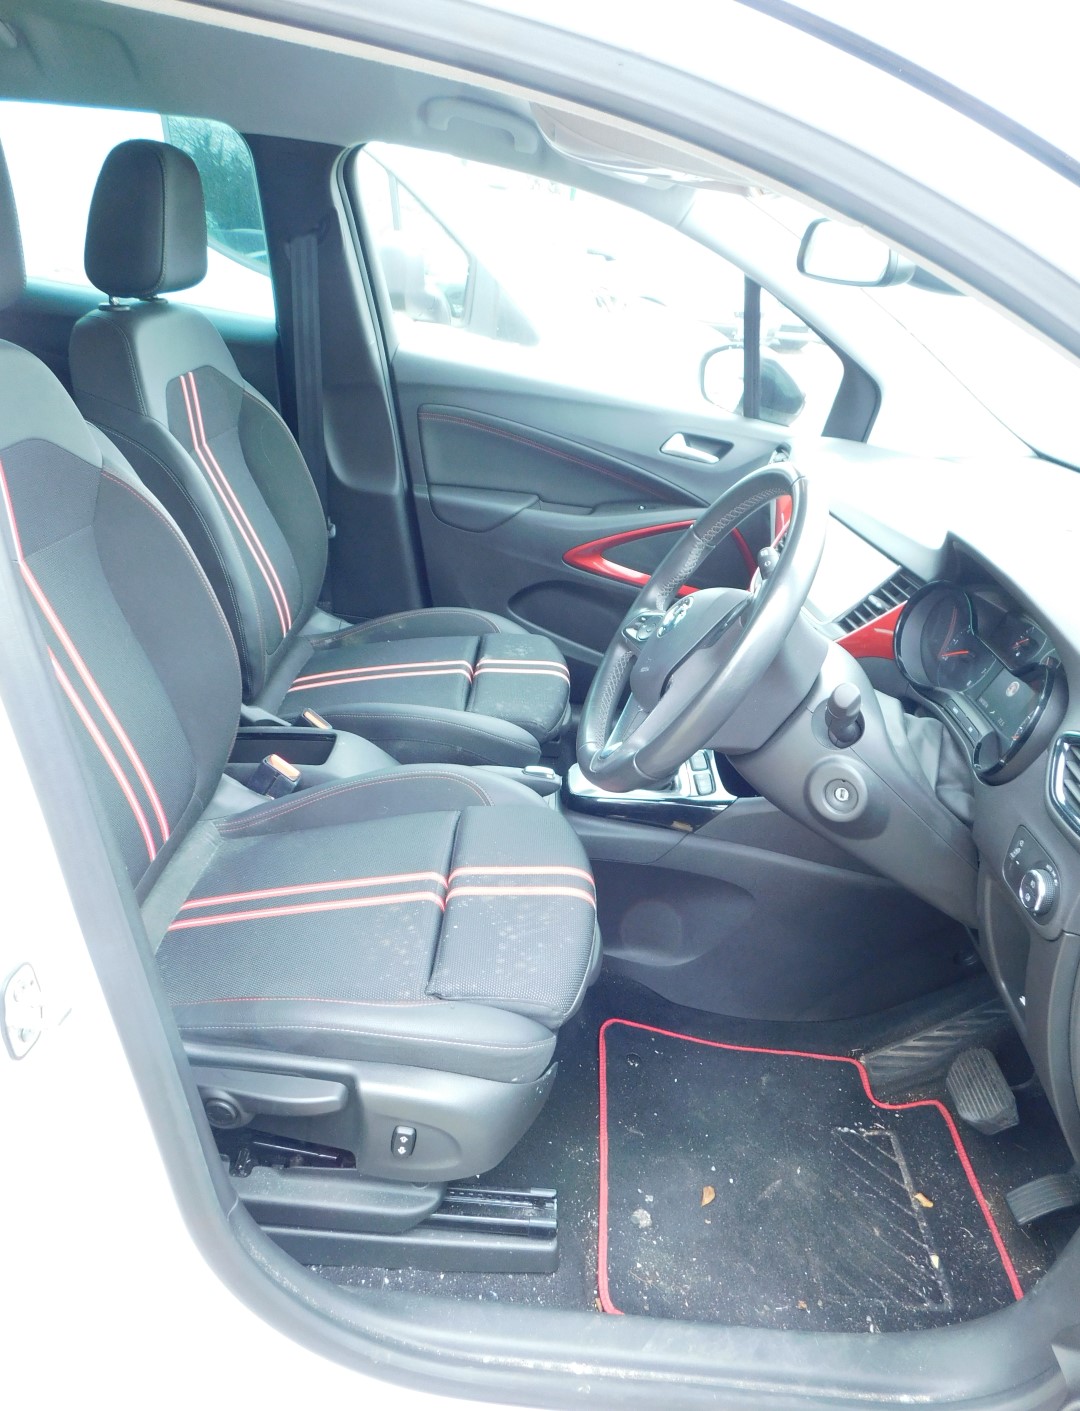 Vauxhall Crossland SRI NAV Turbo Auto five door hatchback, Registration DV21 AVB, petrol, automatic, - Image 3 of 9